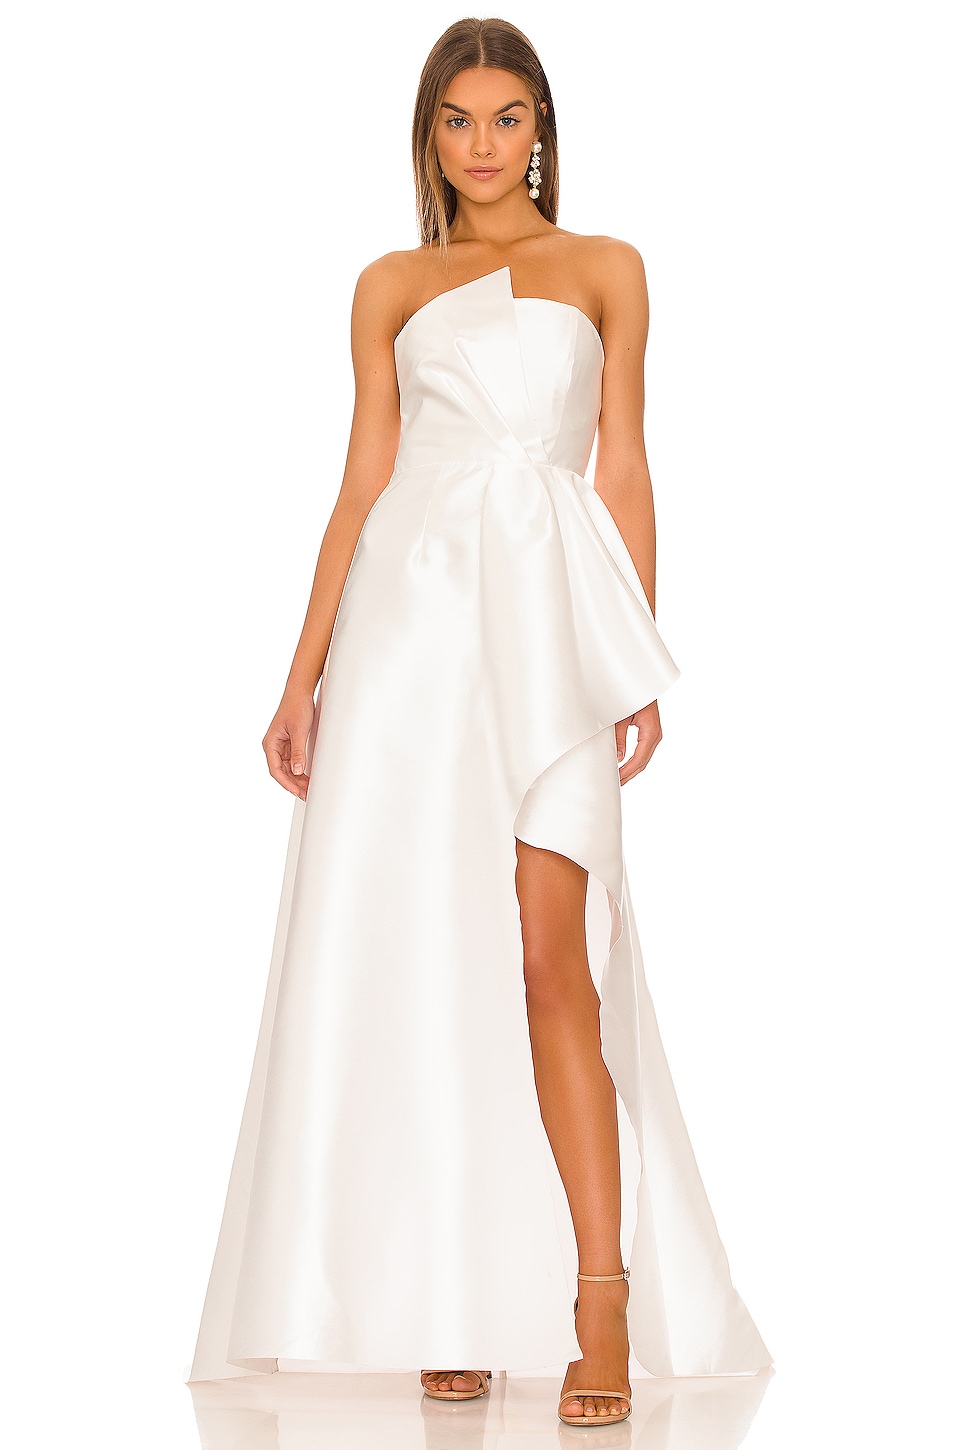 20 stunning wedding dress ideas under $300 - Good Morning America